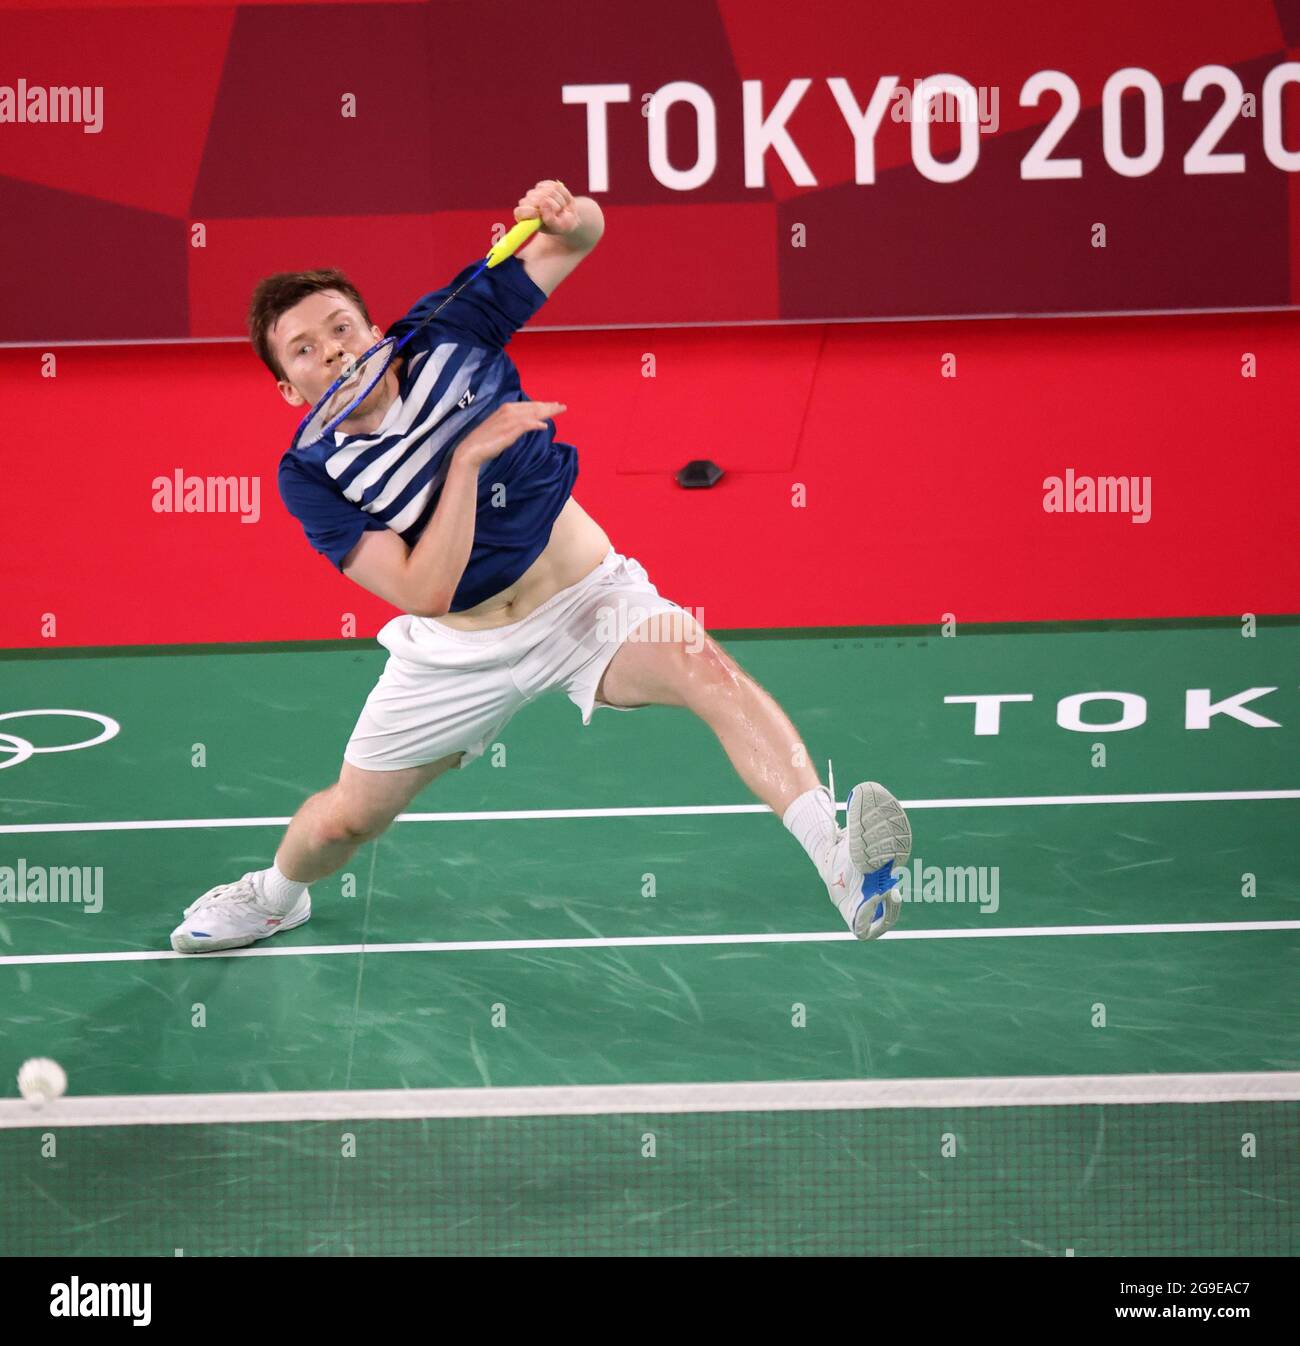 Jul 26, 2021 - Tokyo, Japan: Badmintonist, Helsinki, Finland, KALLE  KALJONEN, 27, and Austrian, L. Wraqber, 30, compete in the Badminton Men's  Singles at the 2020 Tokyo Summer Olympics. Kaljonen won 21-17,